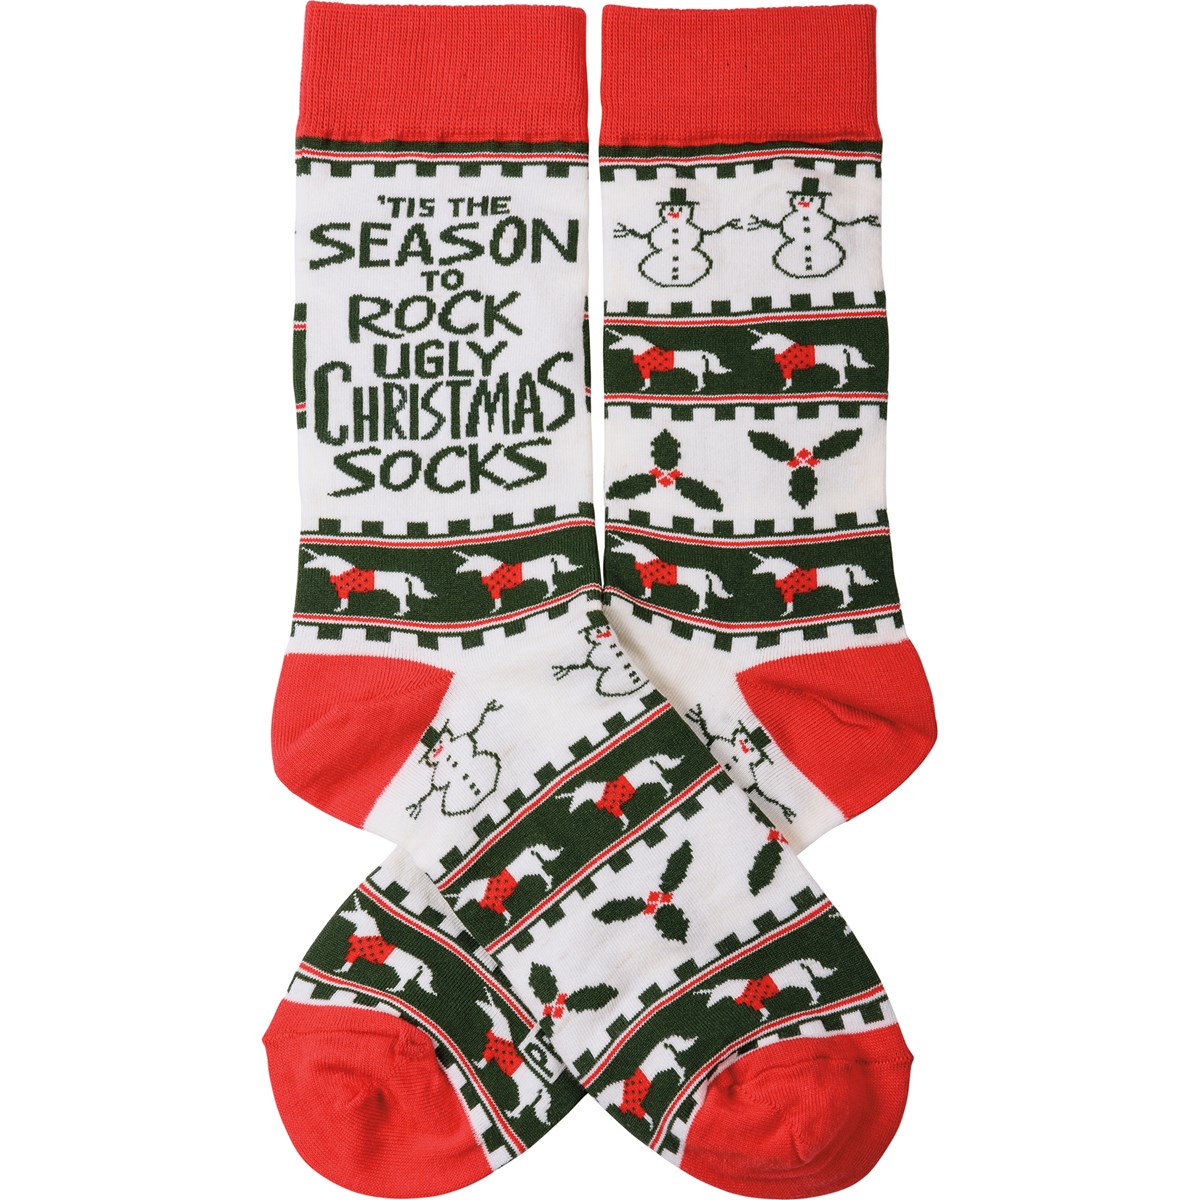 Socks - Season To Rock The Ugly Christmas Socks - One Size Fits Most - Cotton, Nylon, Spandex